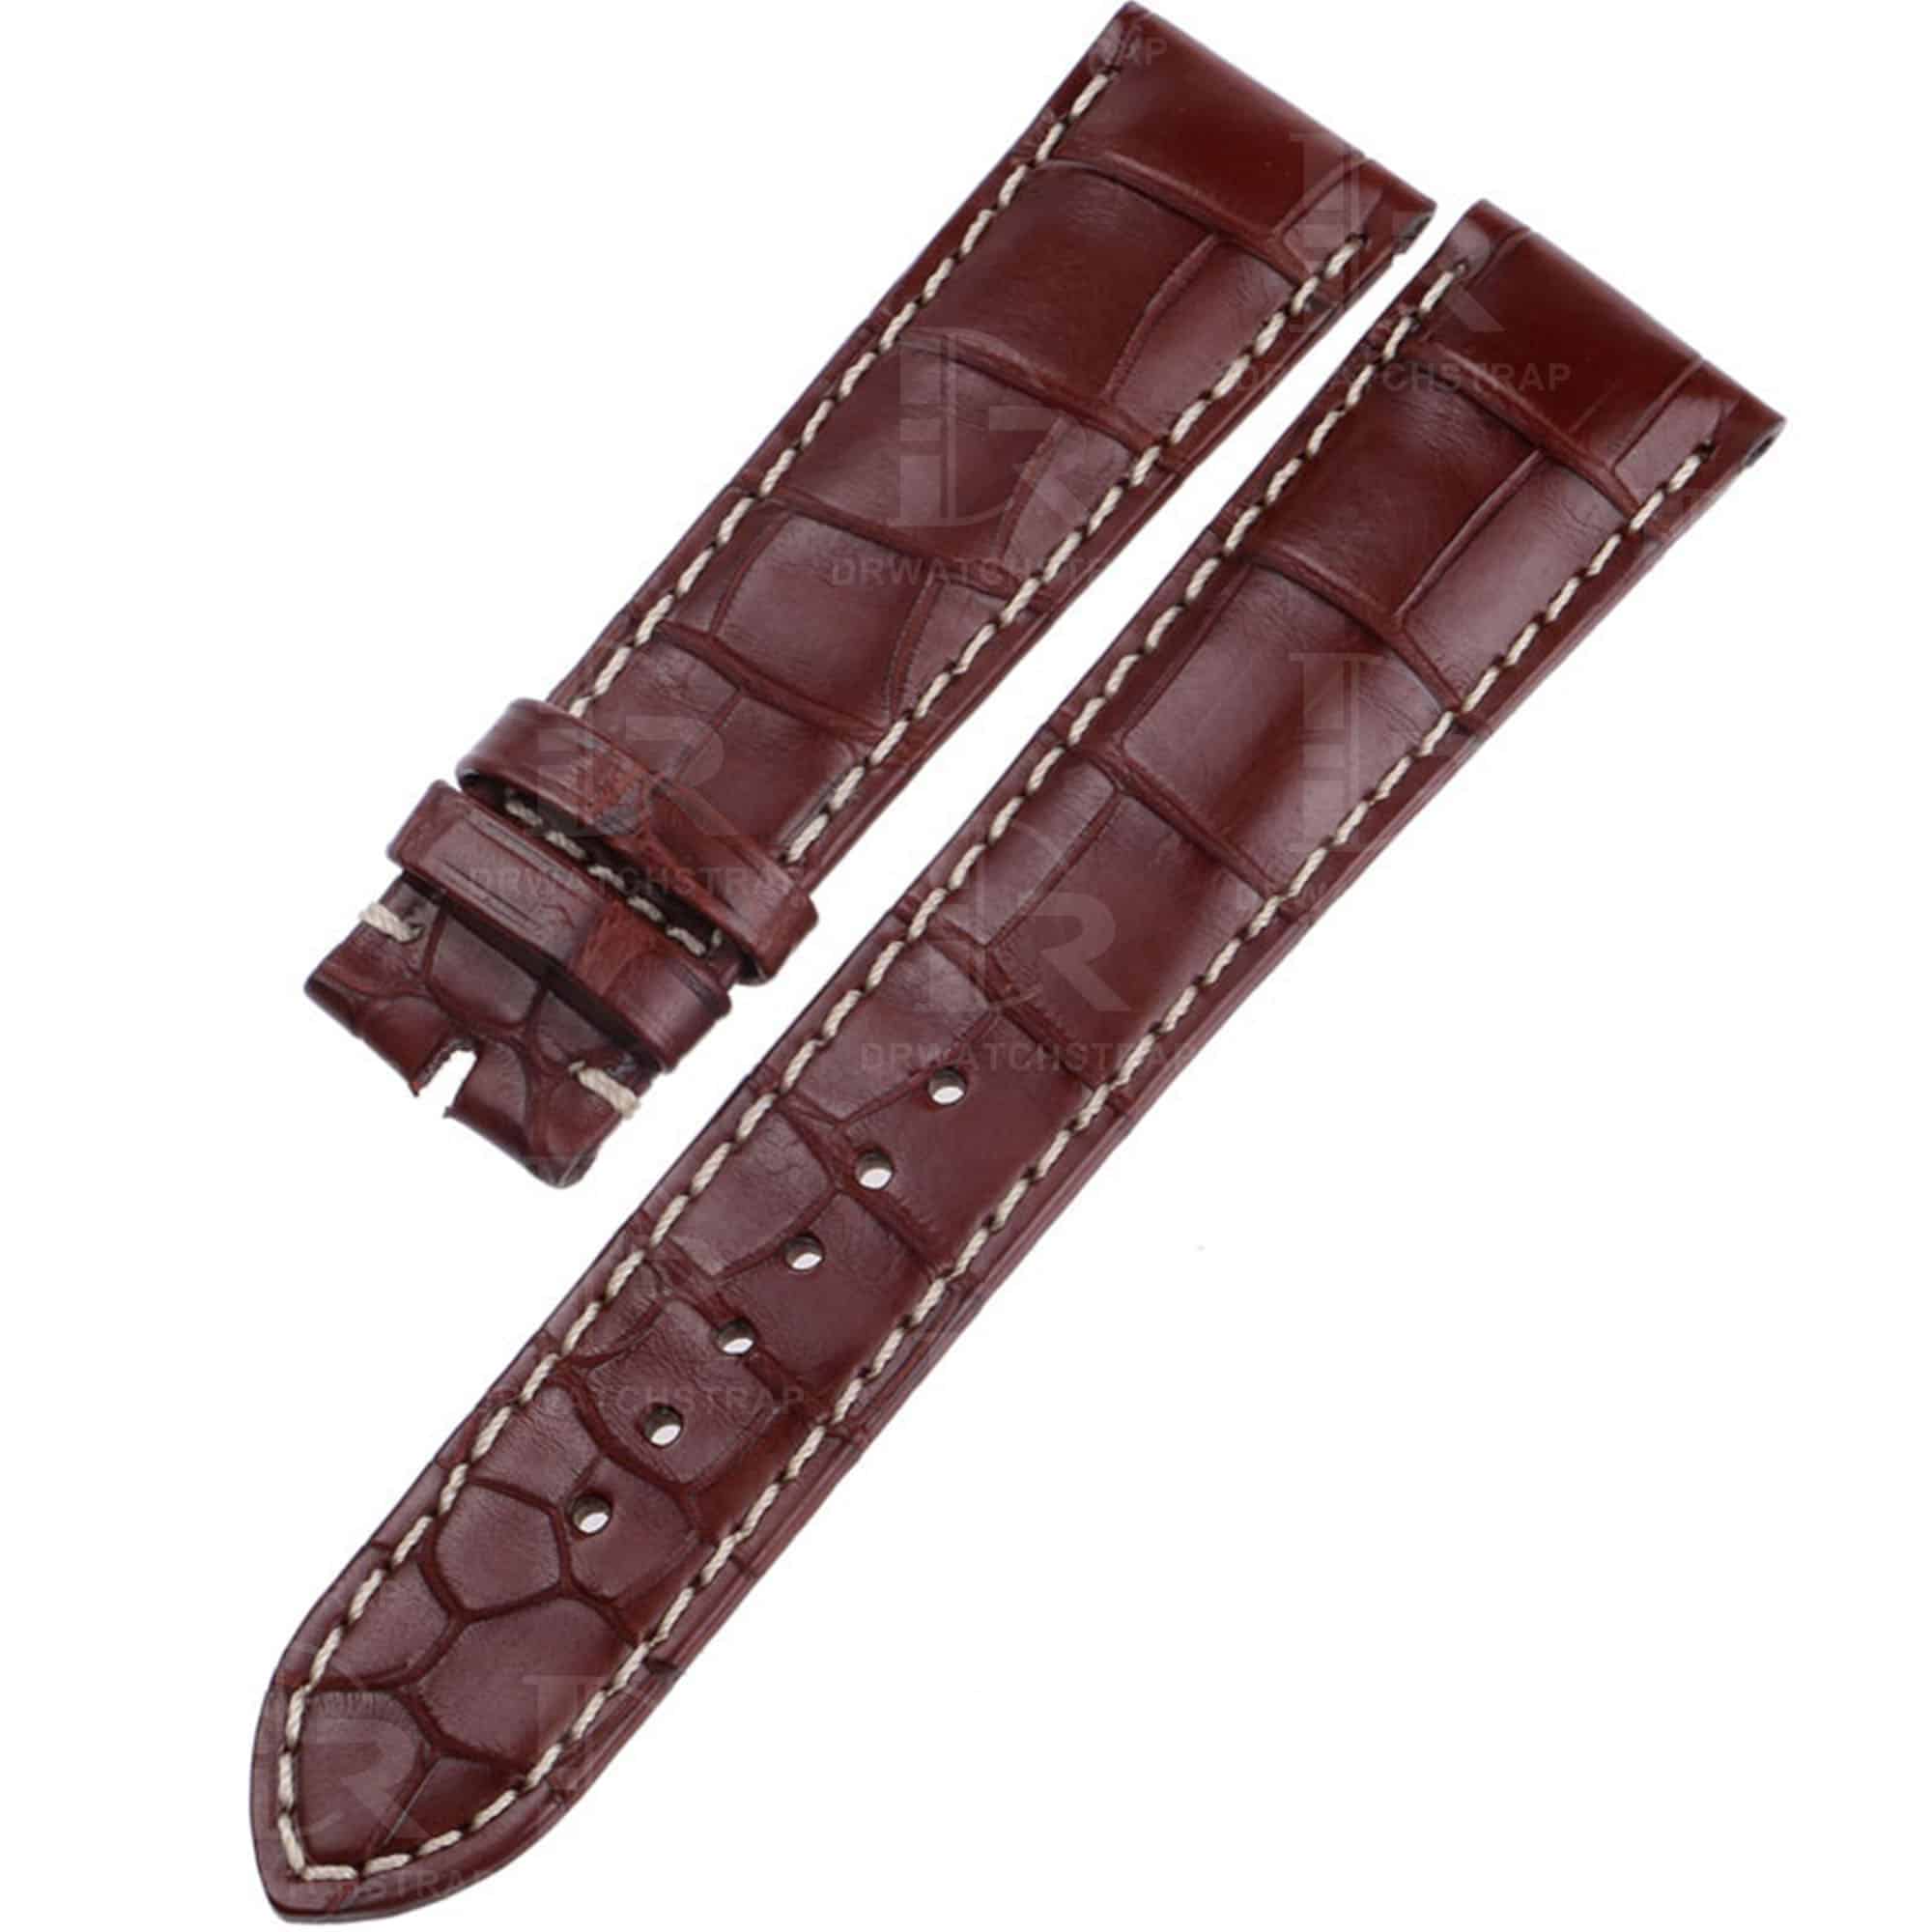 Handmade custom leather alligator watchband for Corum Admiral's Cup Golden Bridge strap